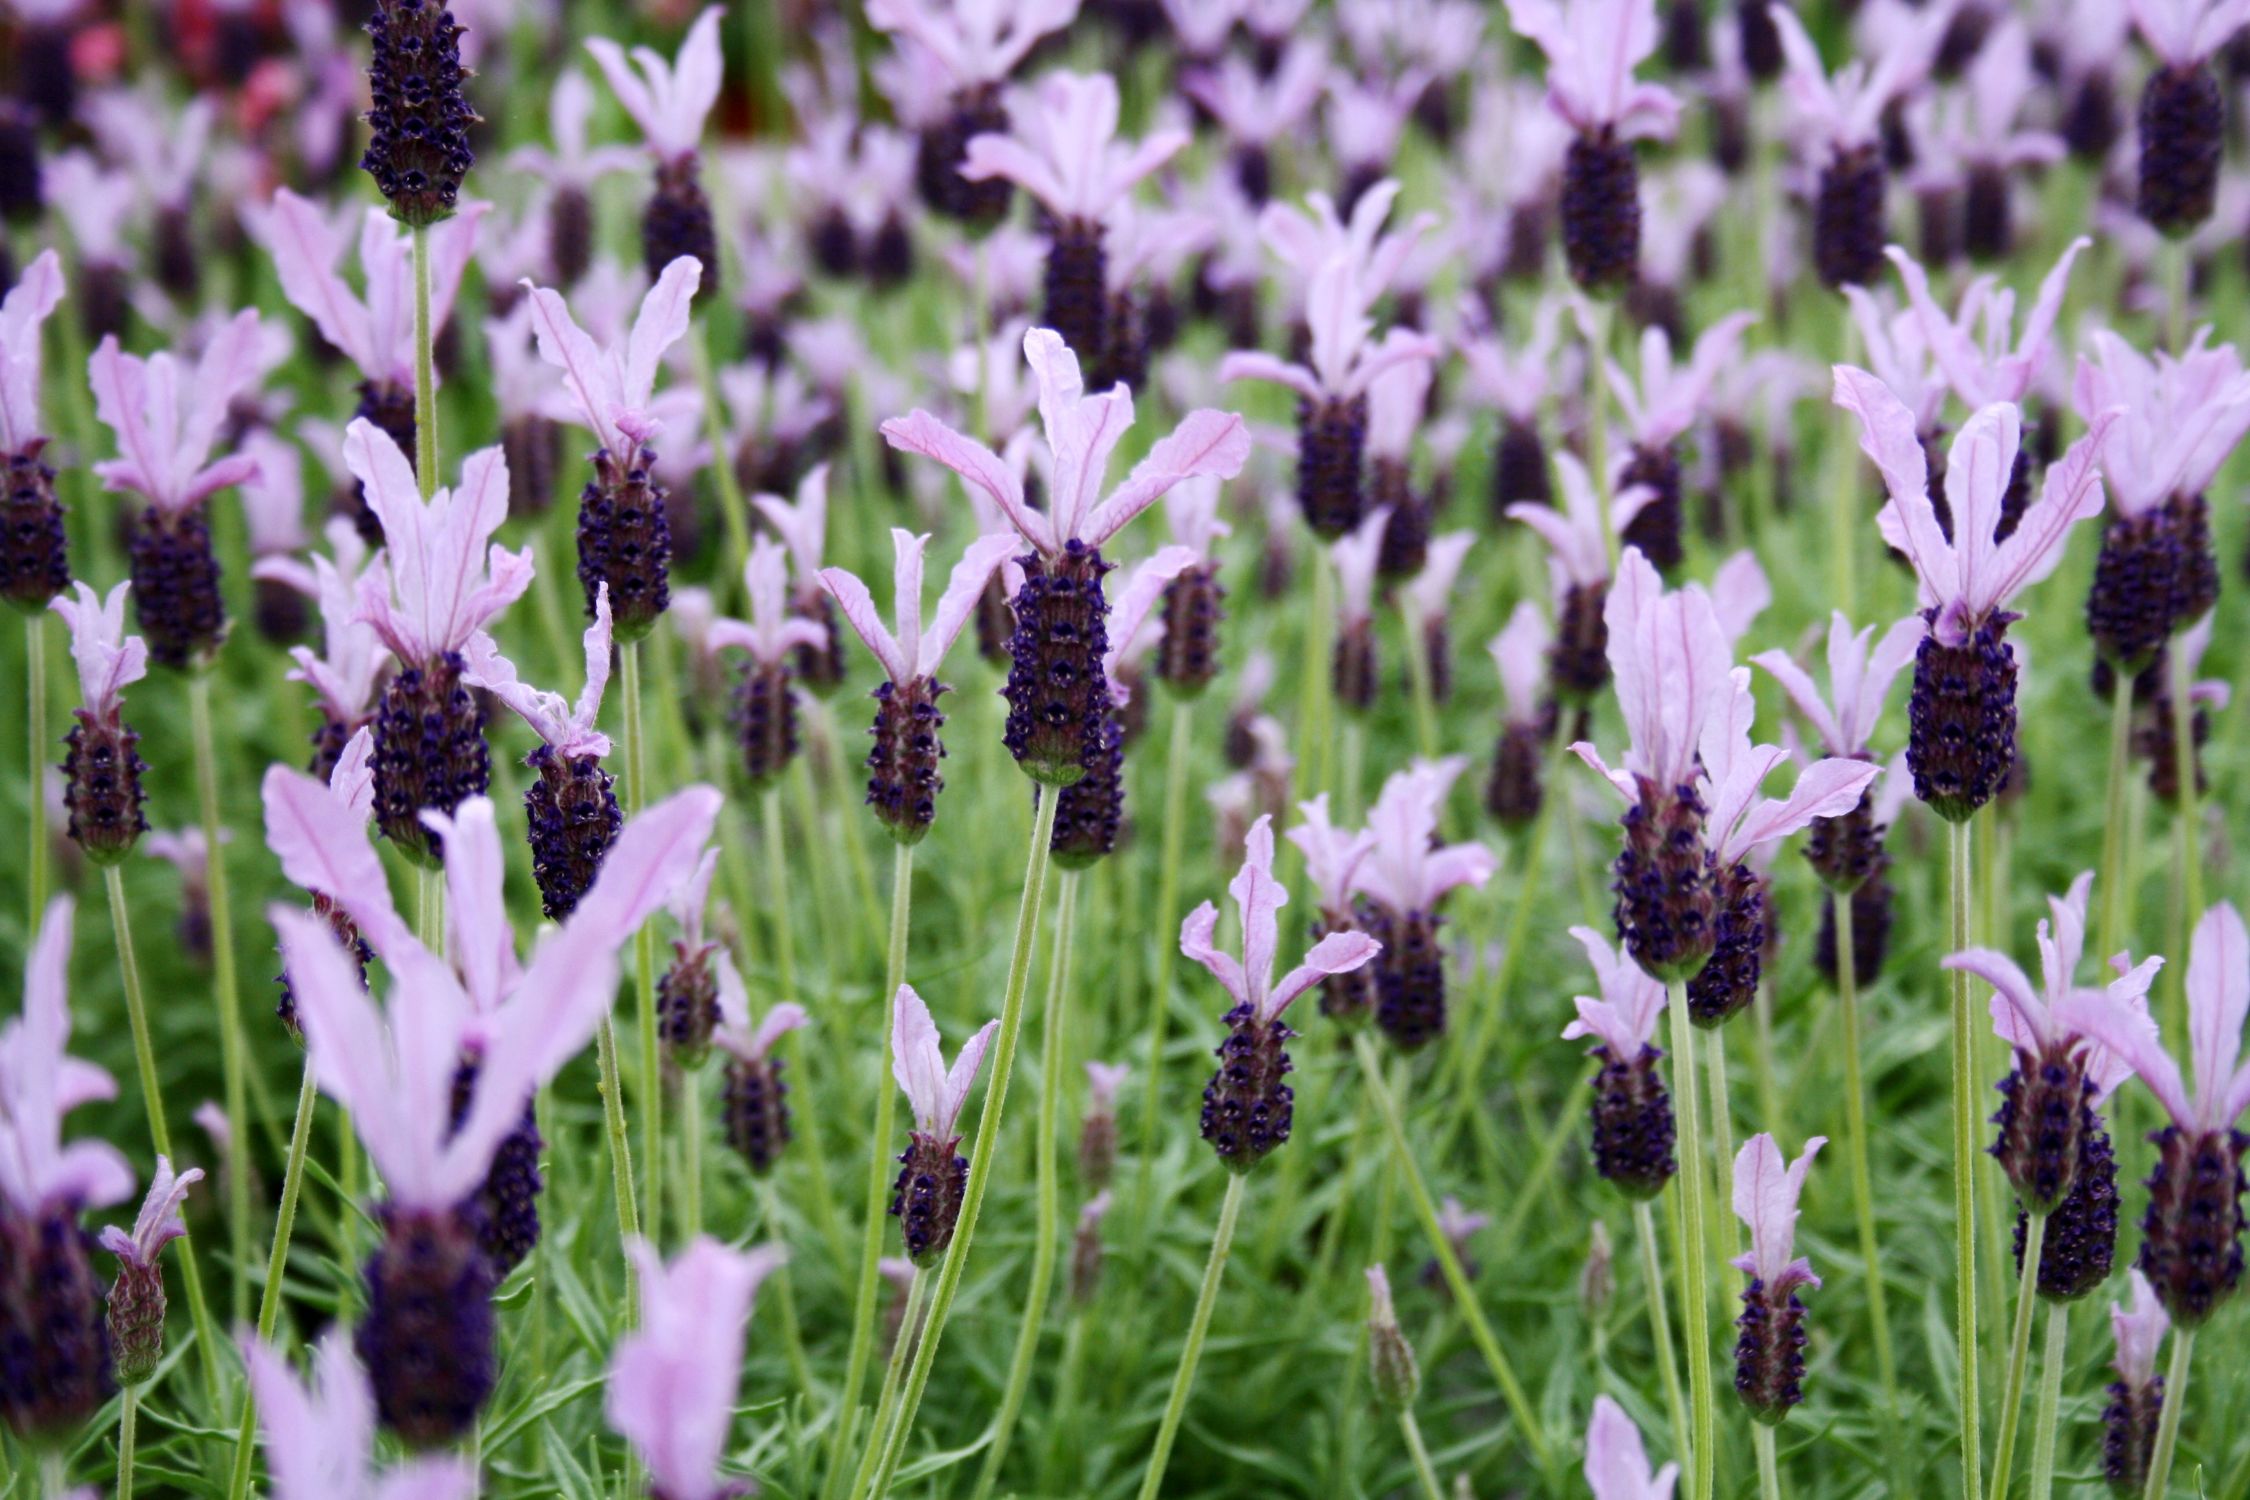 Bild mit Pflanzen, Blumen, Lila, Lavendel, Kräuter, Blume, Feld, Felder, Blüten, garten, blüte, Lavendelblüte, Lavendelfeld